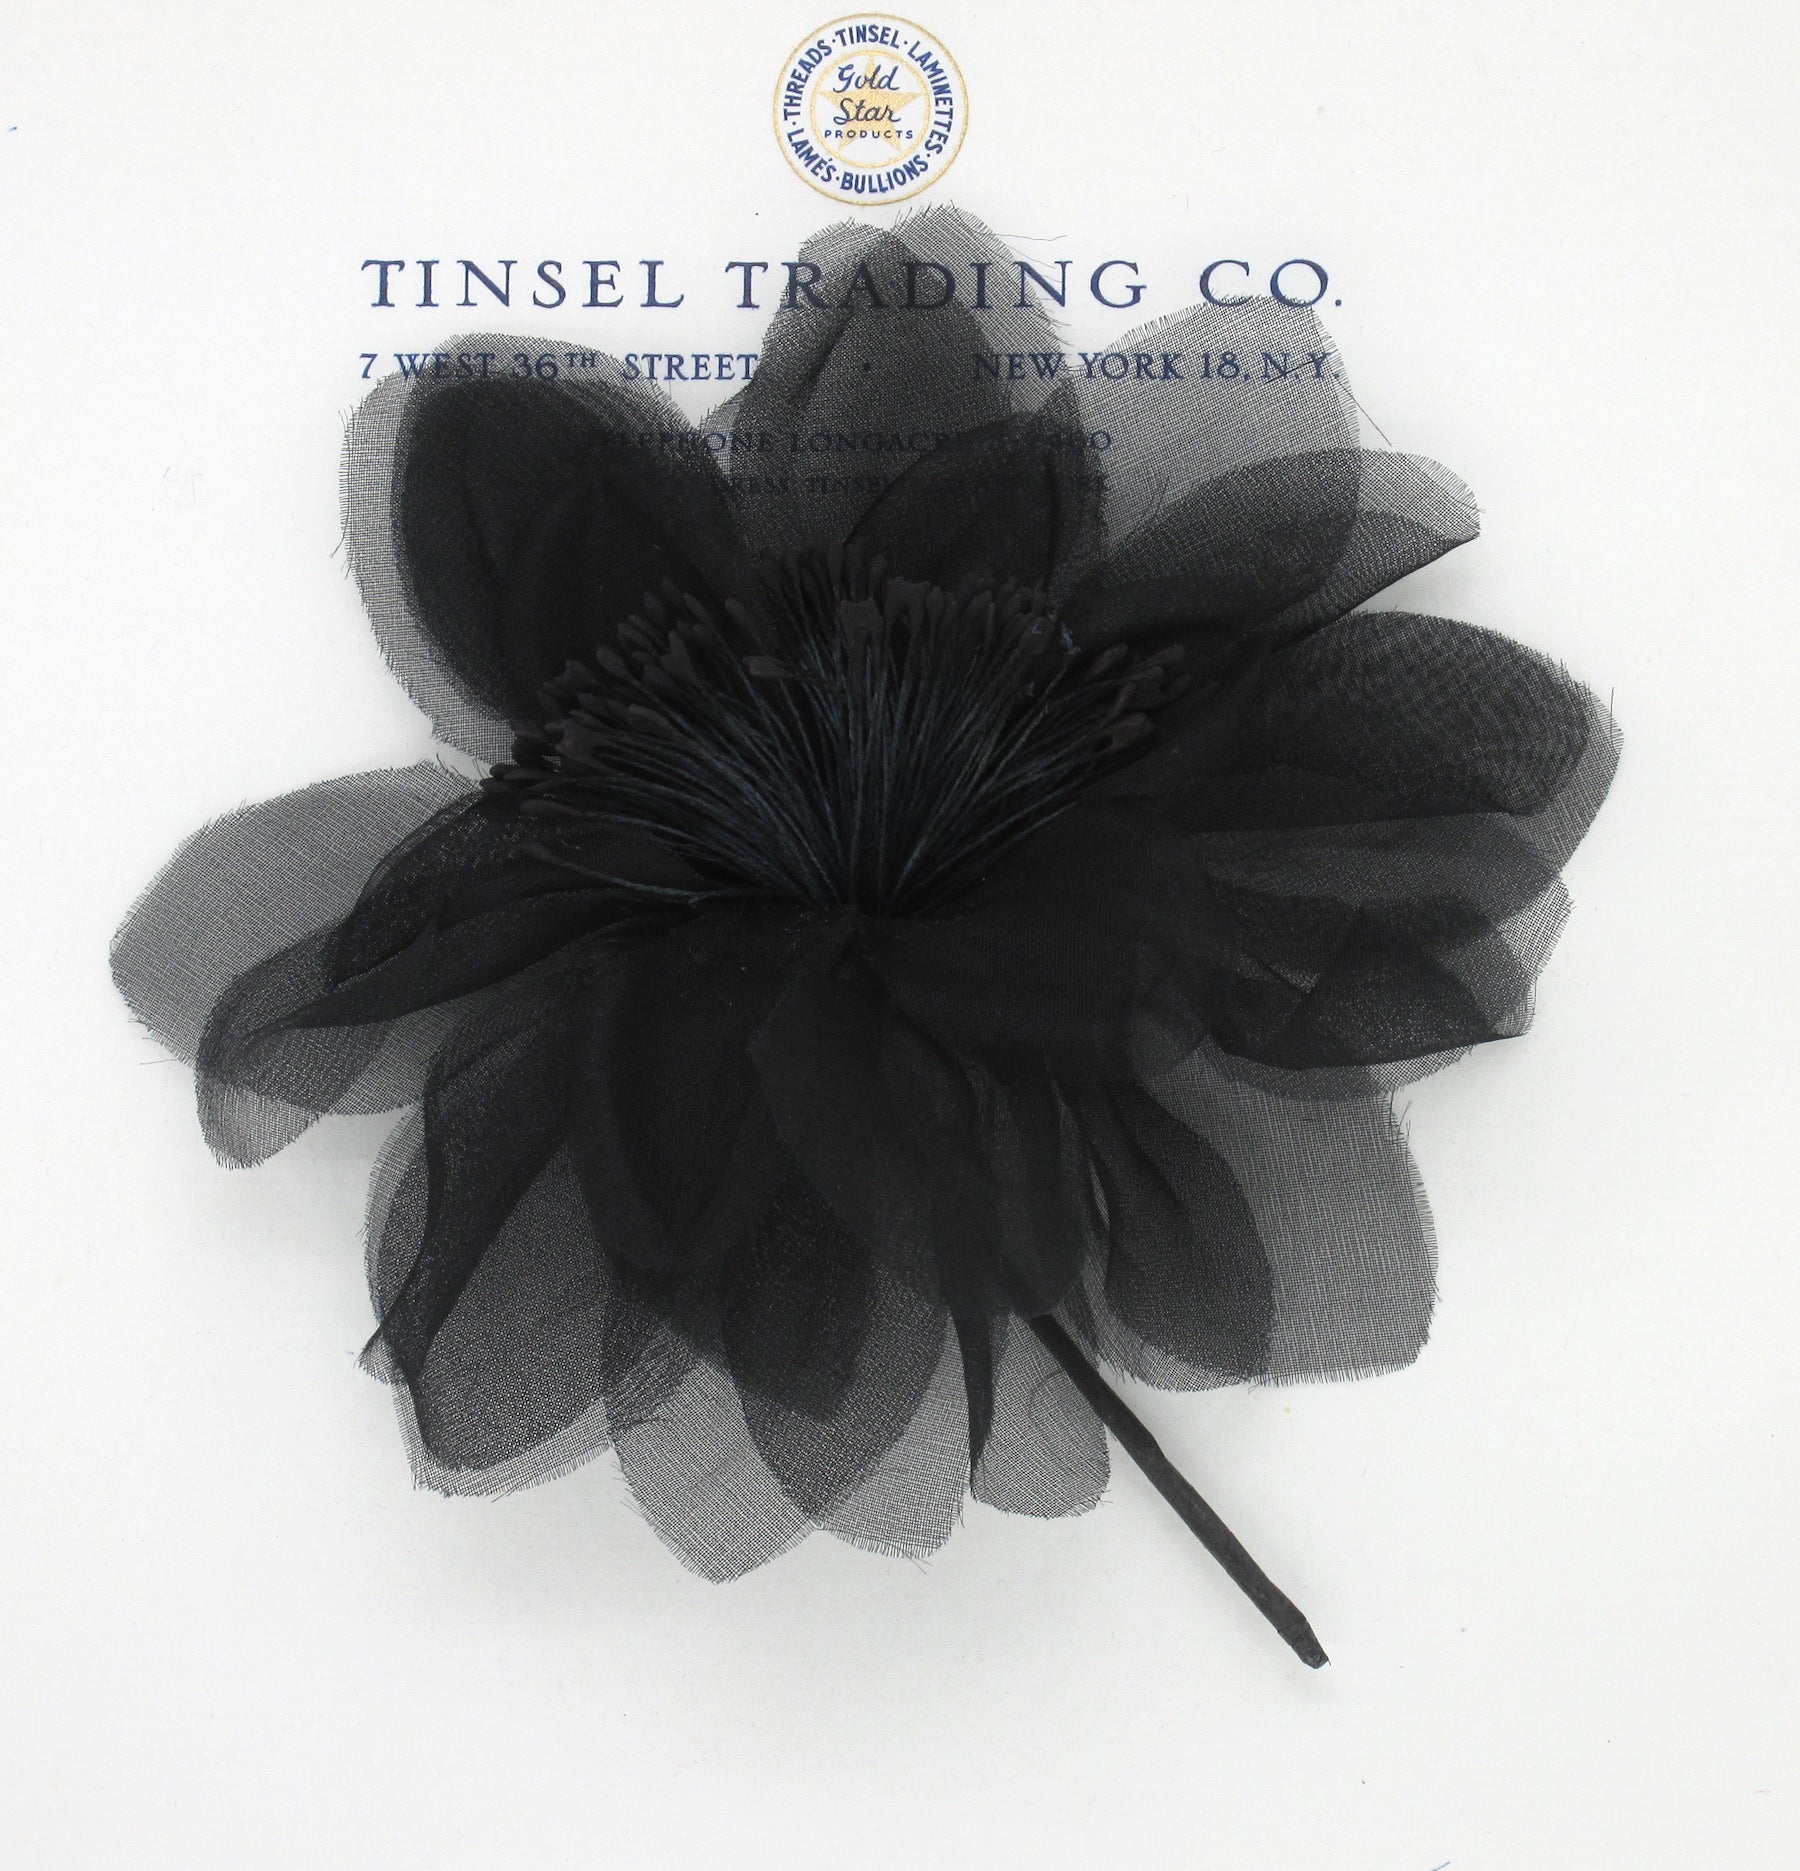 Black Chiffon Flower